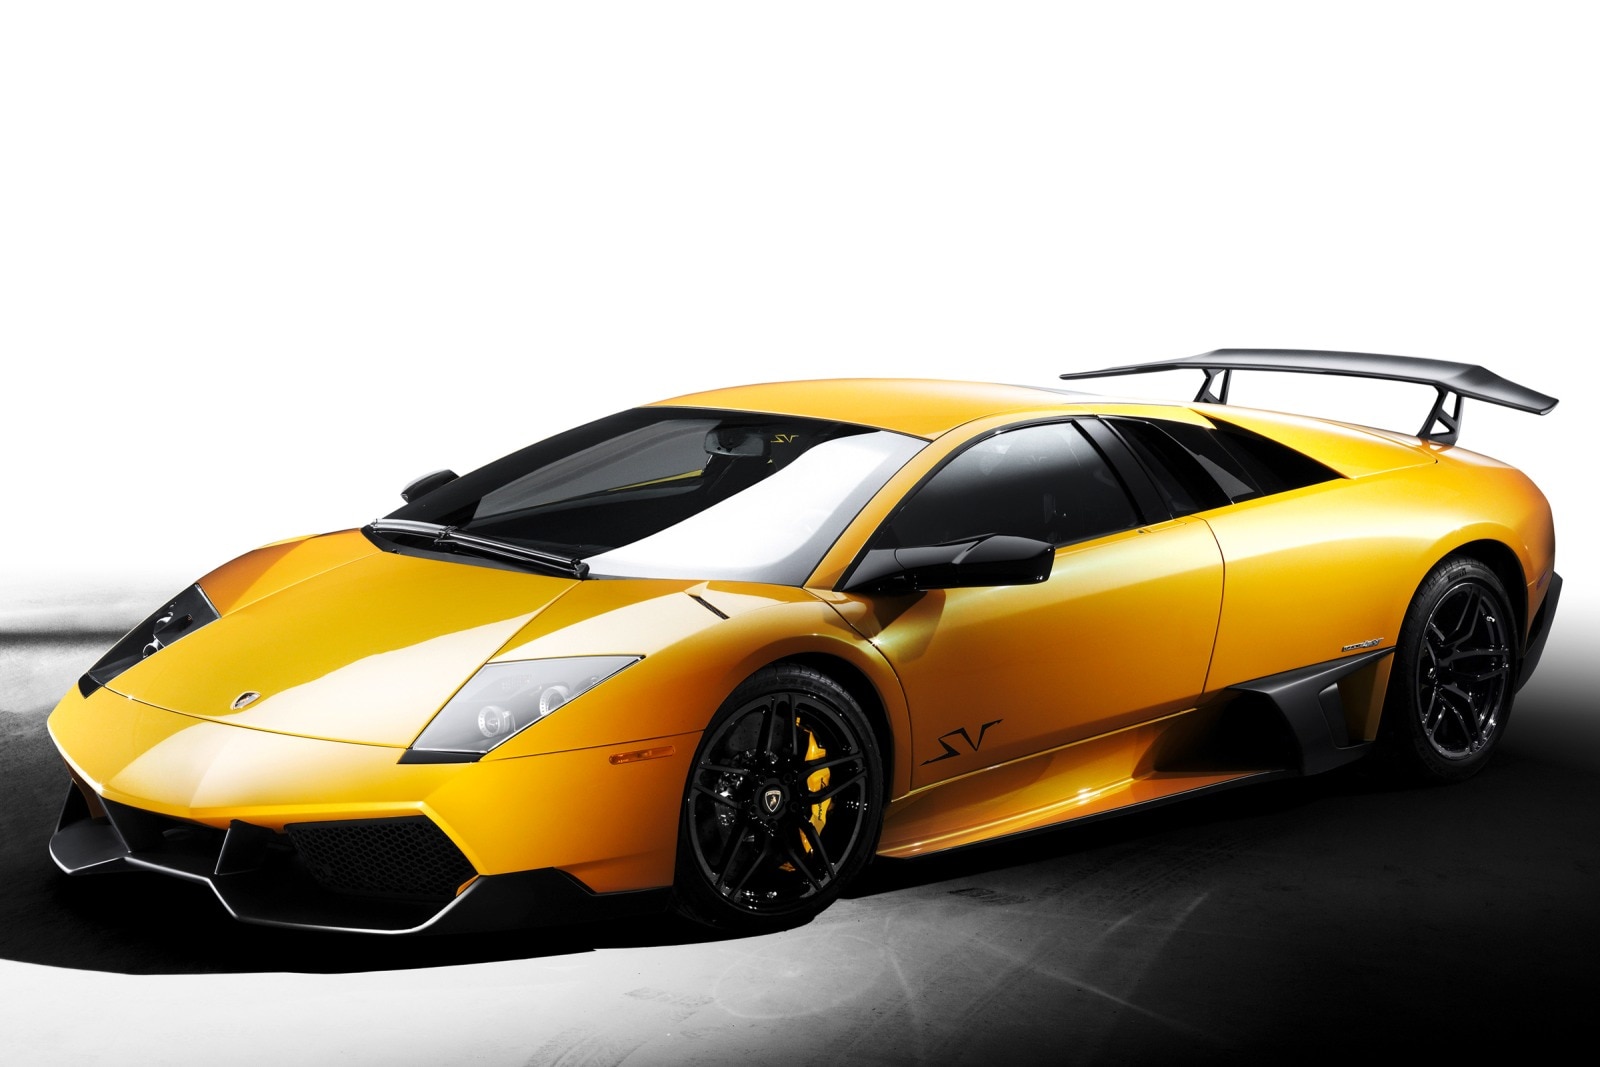 2010 Lamborghini Murcielago Review & Ratings | Edmunds